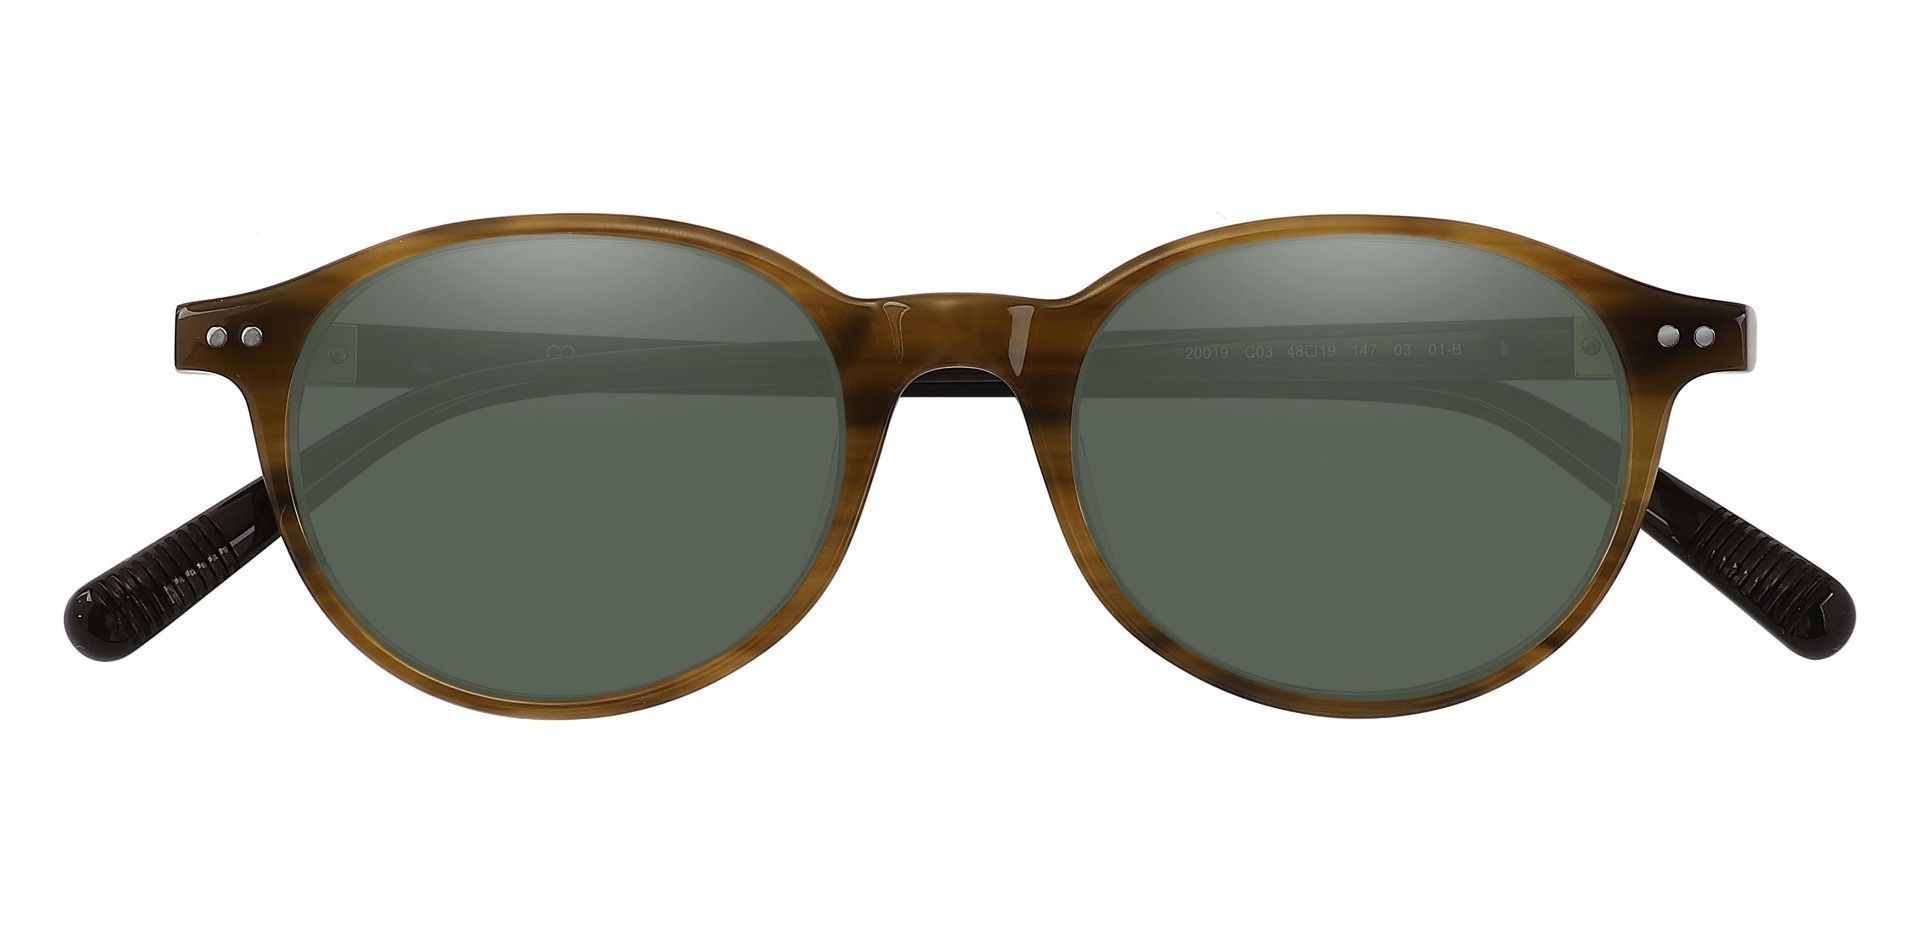 Avon Oval Progressive Sunglasses - Brown Frame With Green Lenses